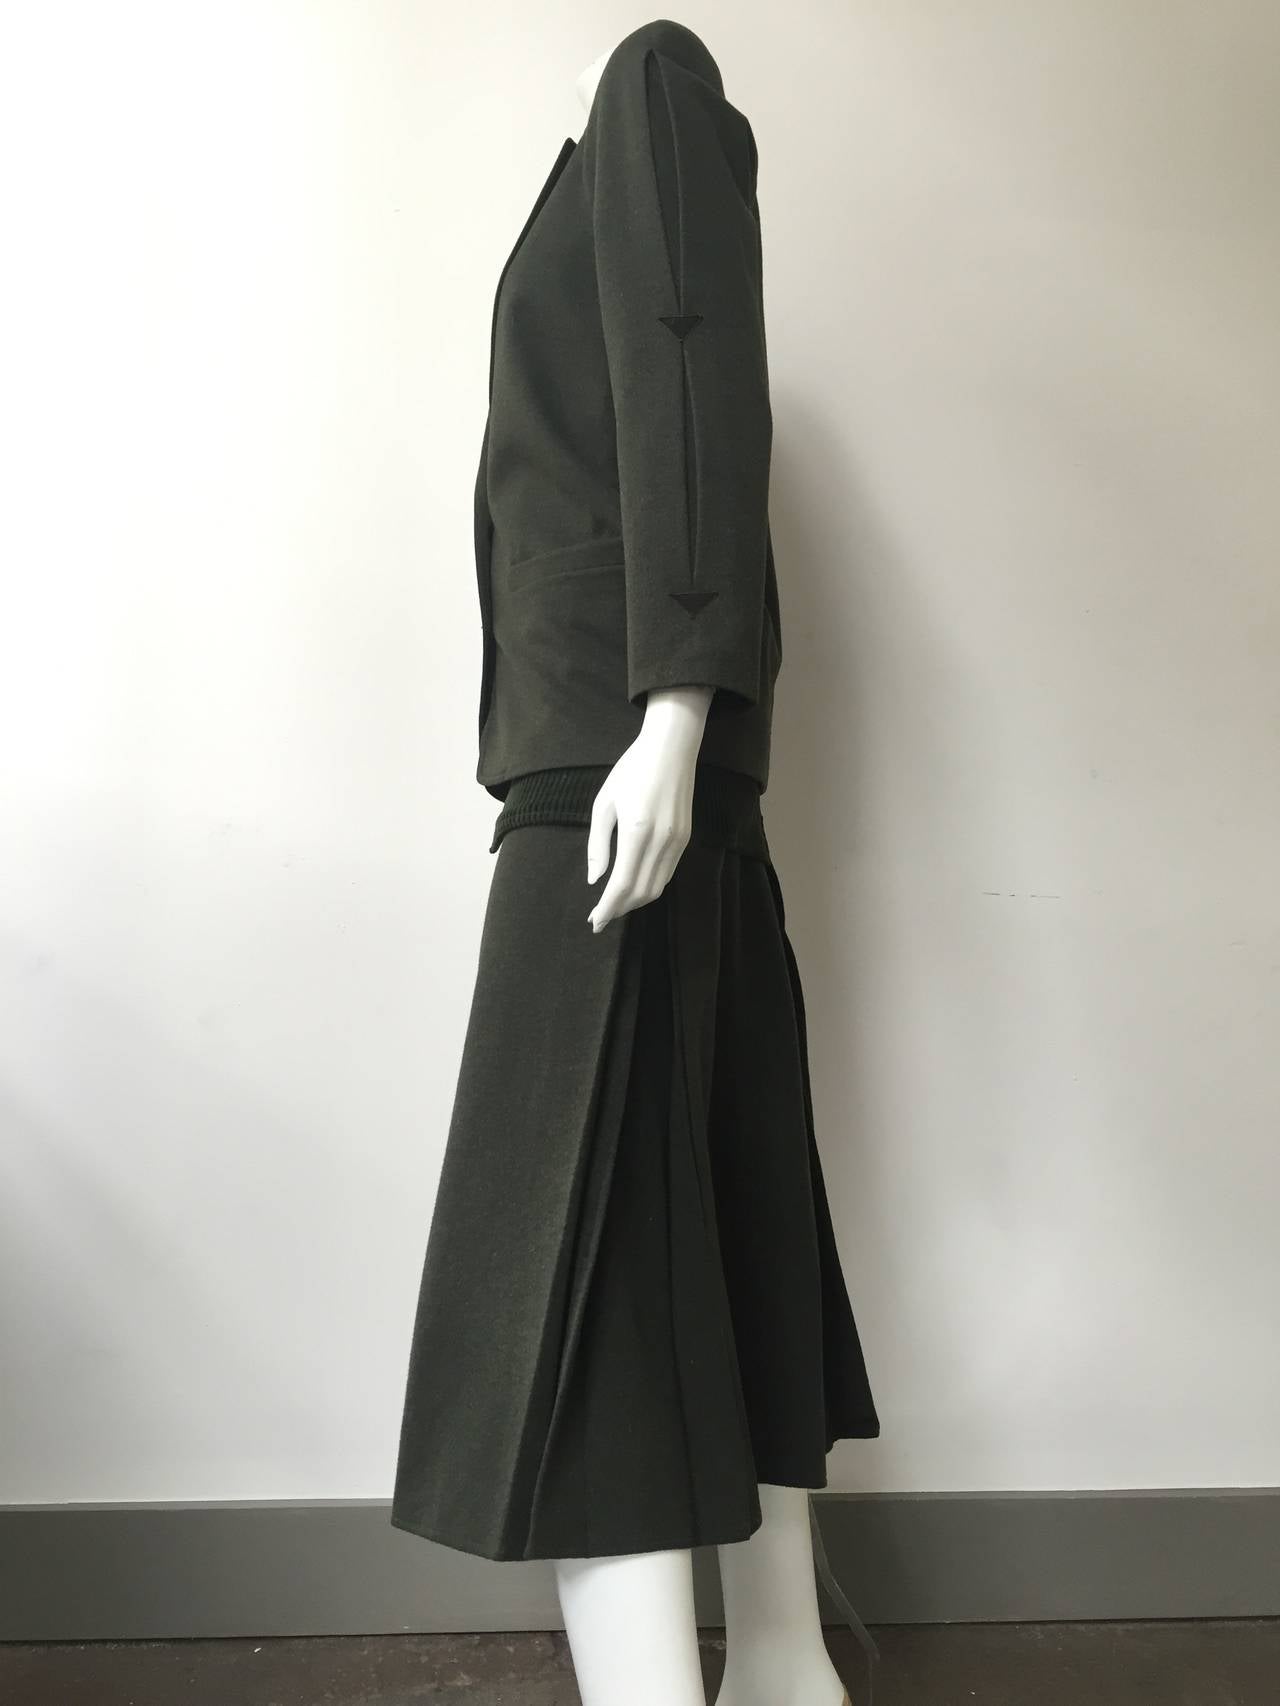 Gianni Versace 80s green wool jacket & gauchos size 4 / 38. 1